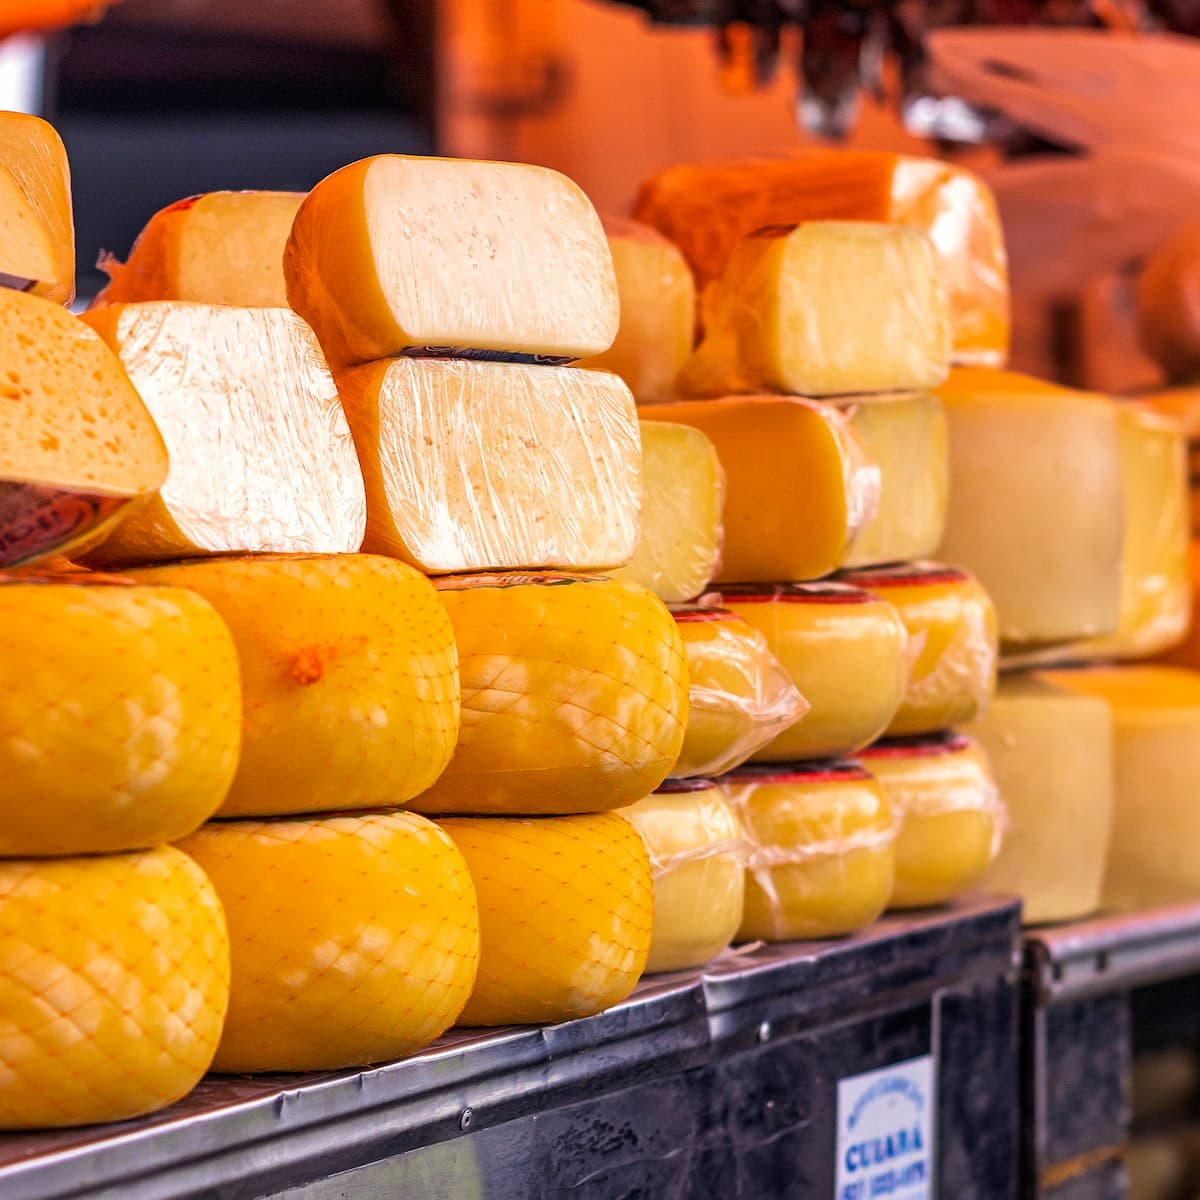 Imagem meramente ilustrativa de queijos, produzidos em uma Queijaria. Immagini: Leandro Bezerra.